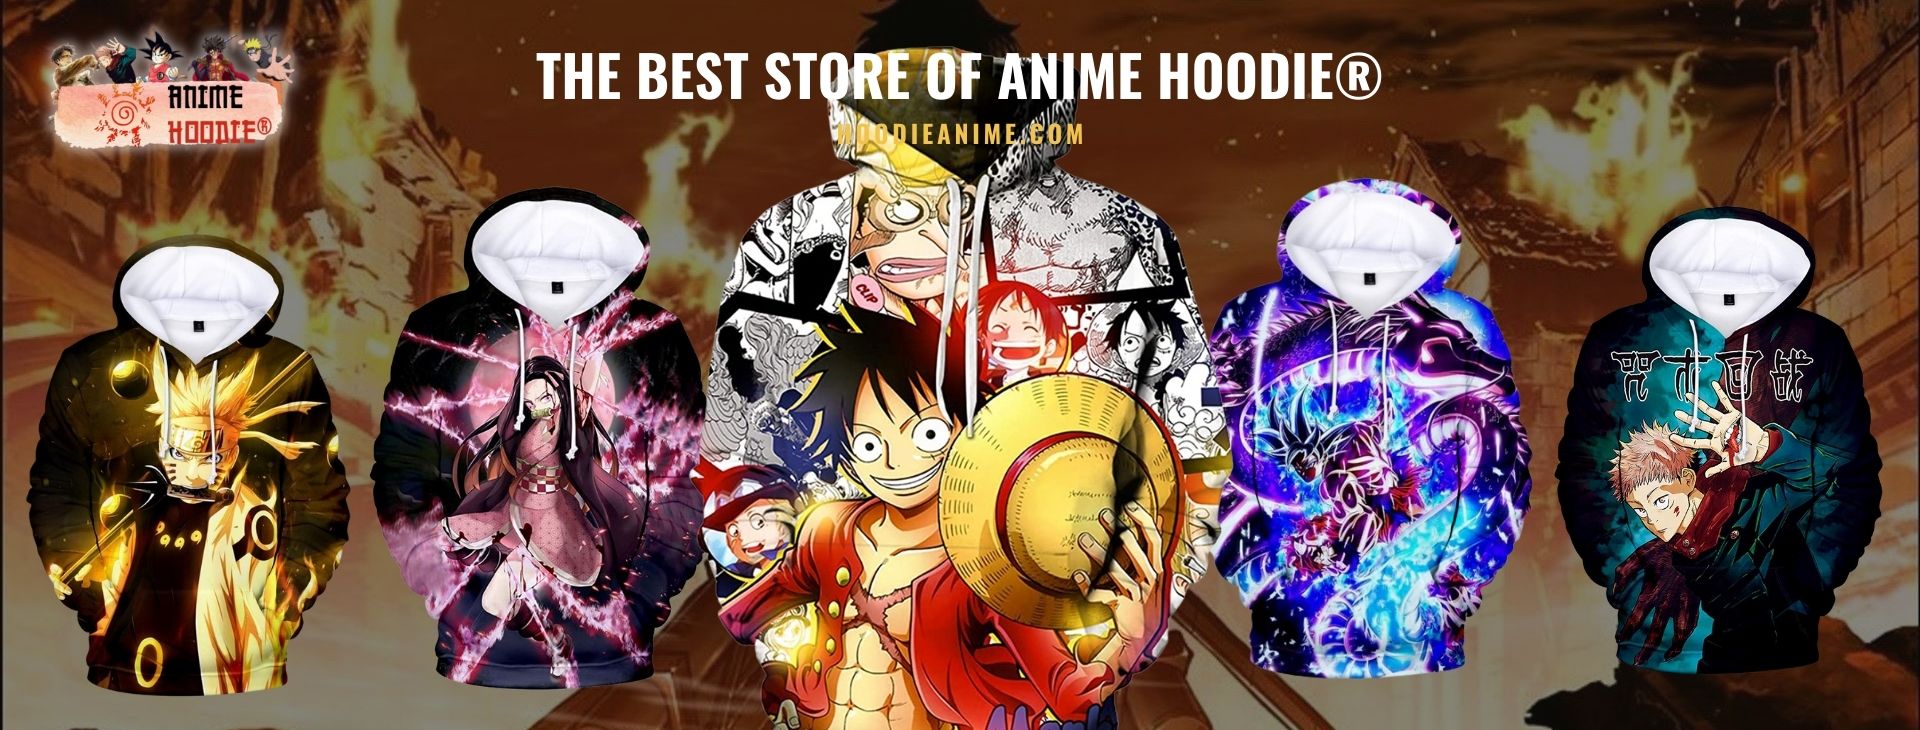 Hoodie Anime Web Banner - Hoodie Anime